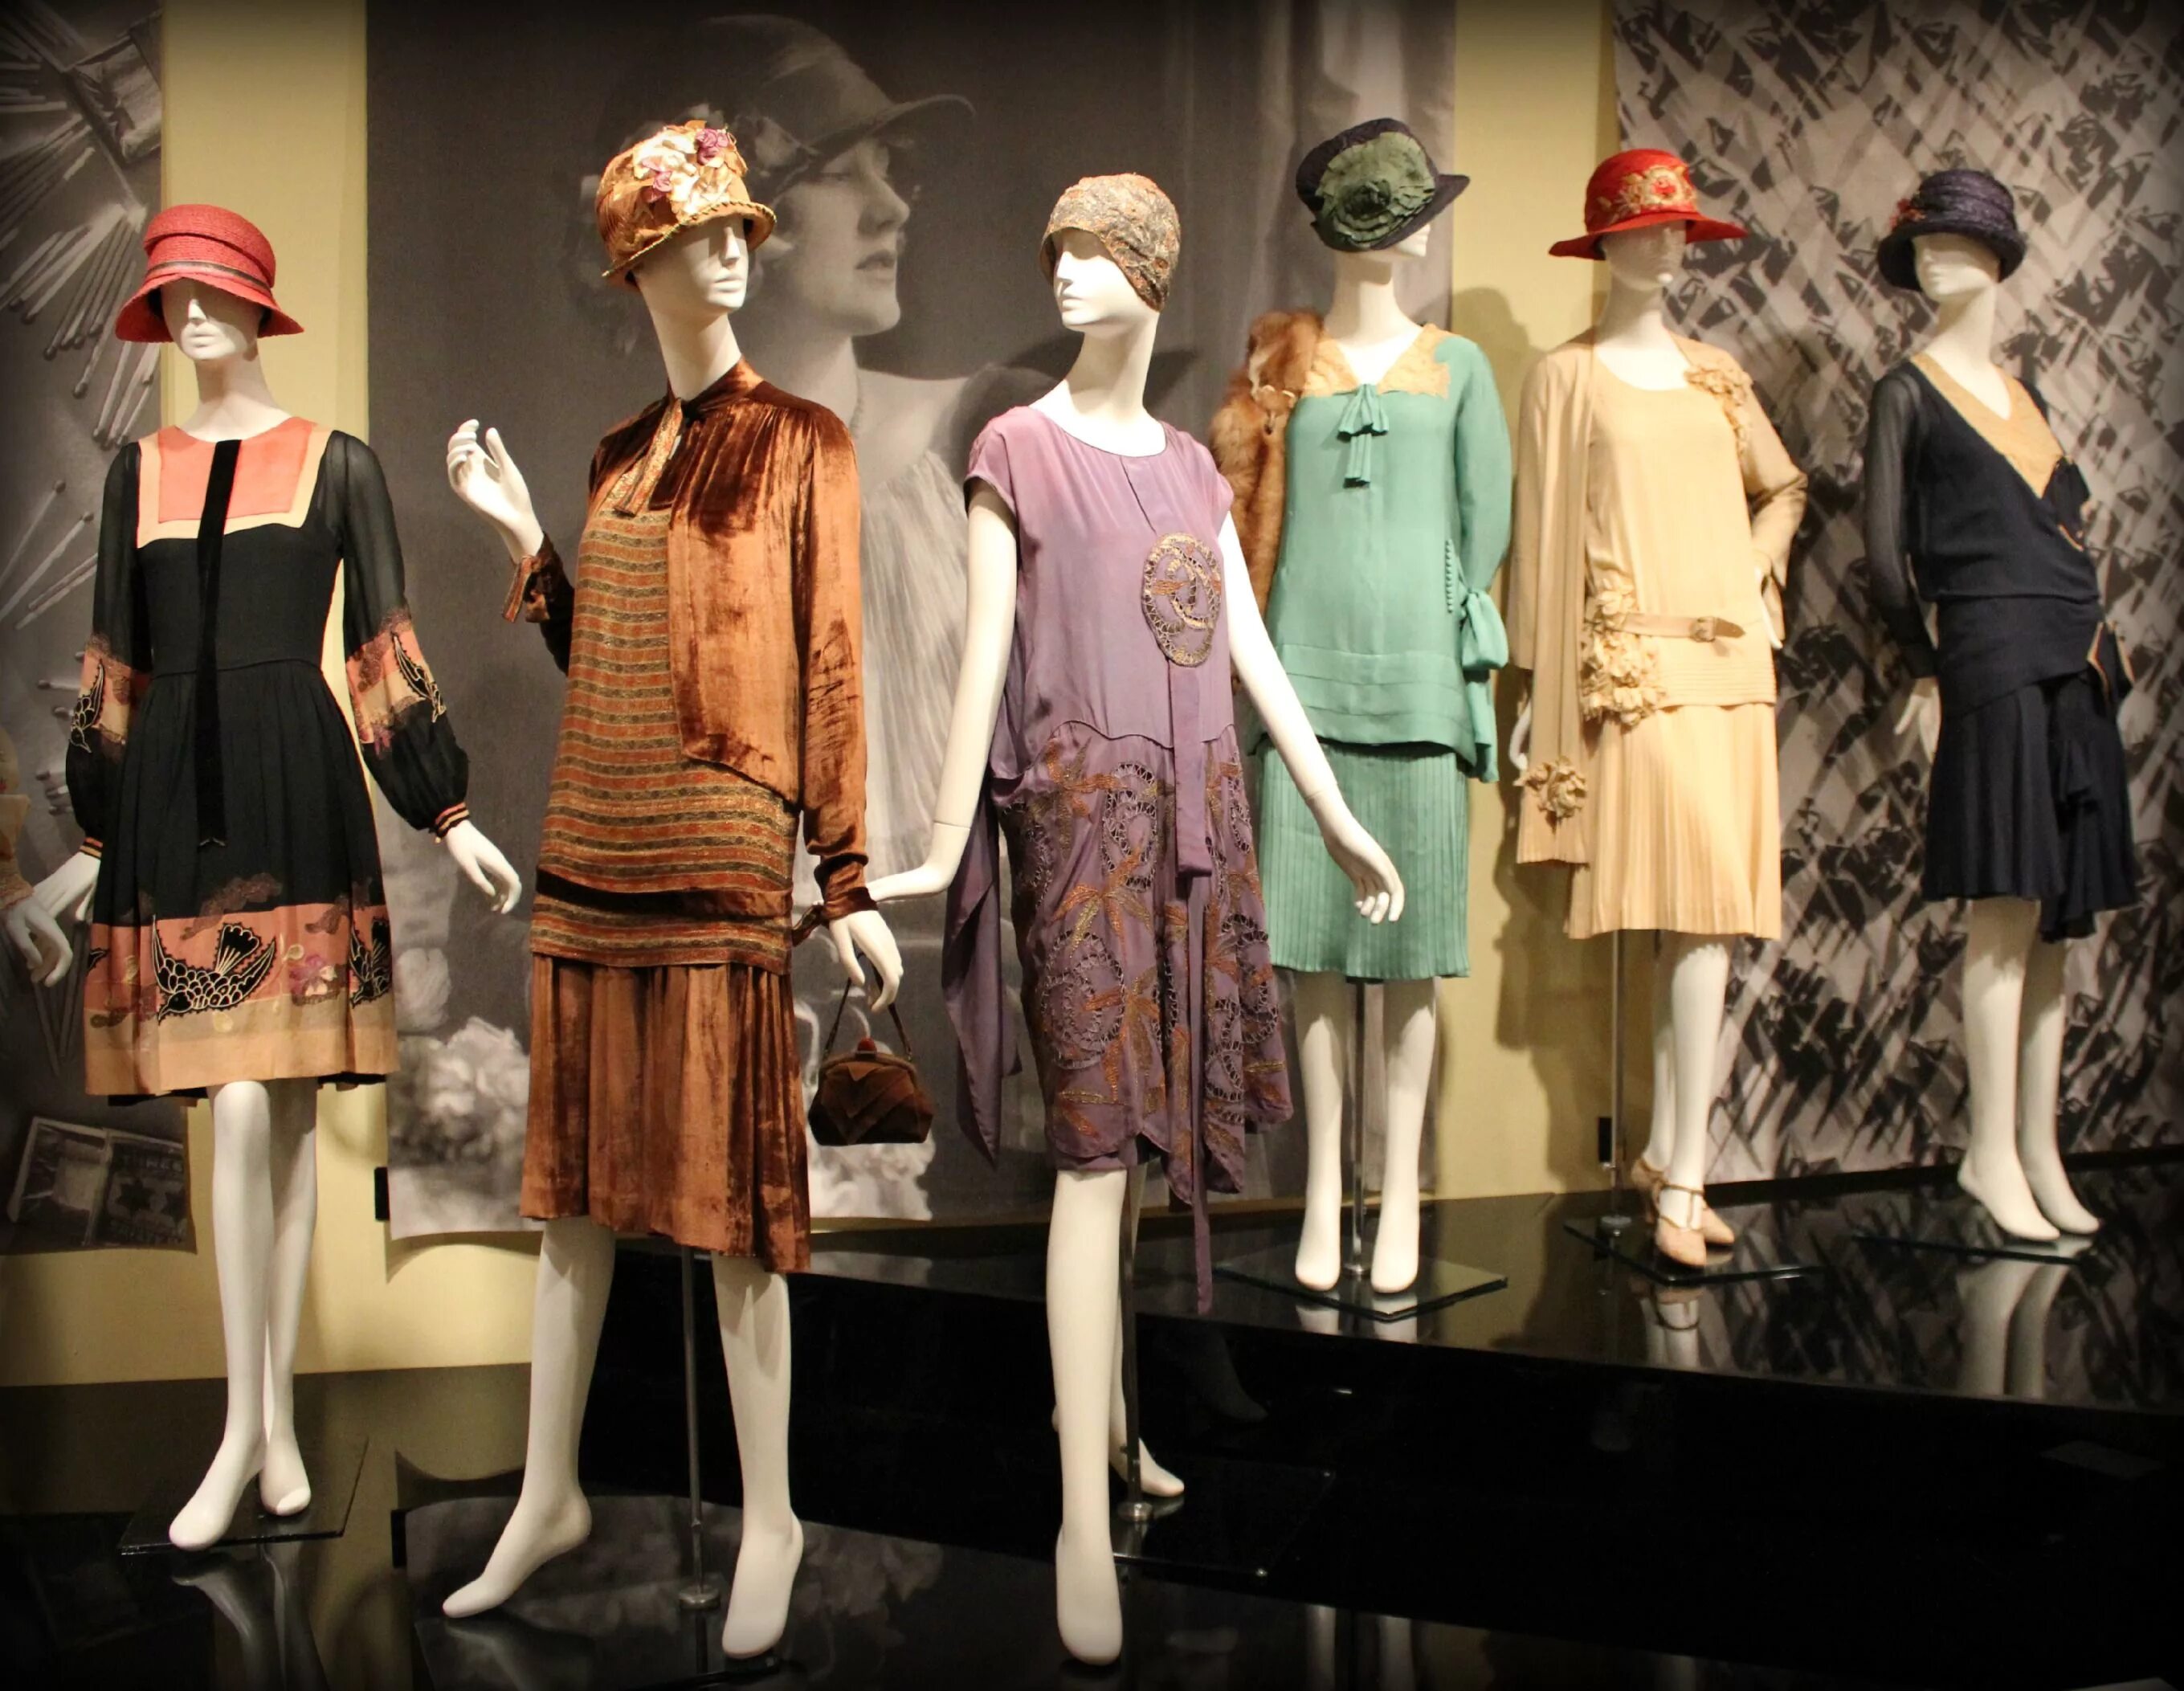 Мода 20х. Беатрис Беллини - британский дизайнер одежды 20 века. НЭП 20е мода мужская. Мода 20-х годов 20-го века. 20е годы 20 века мода.